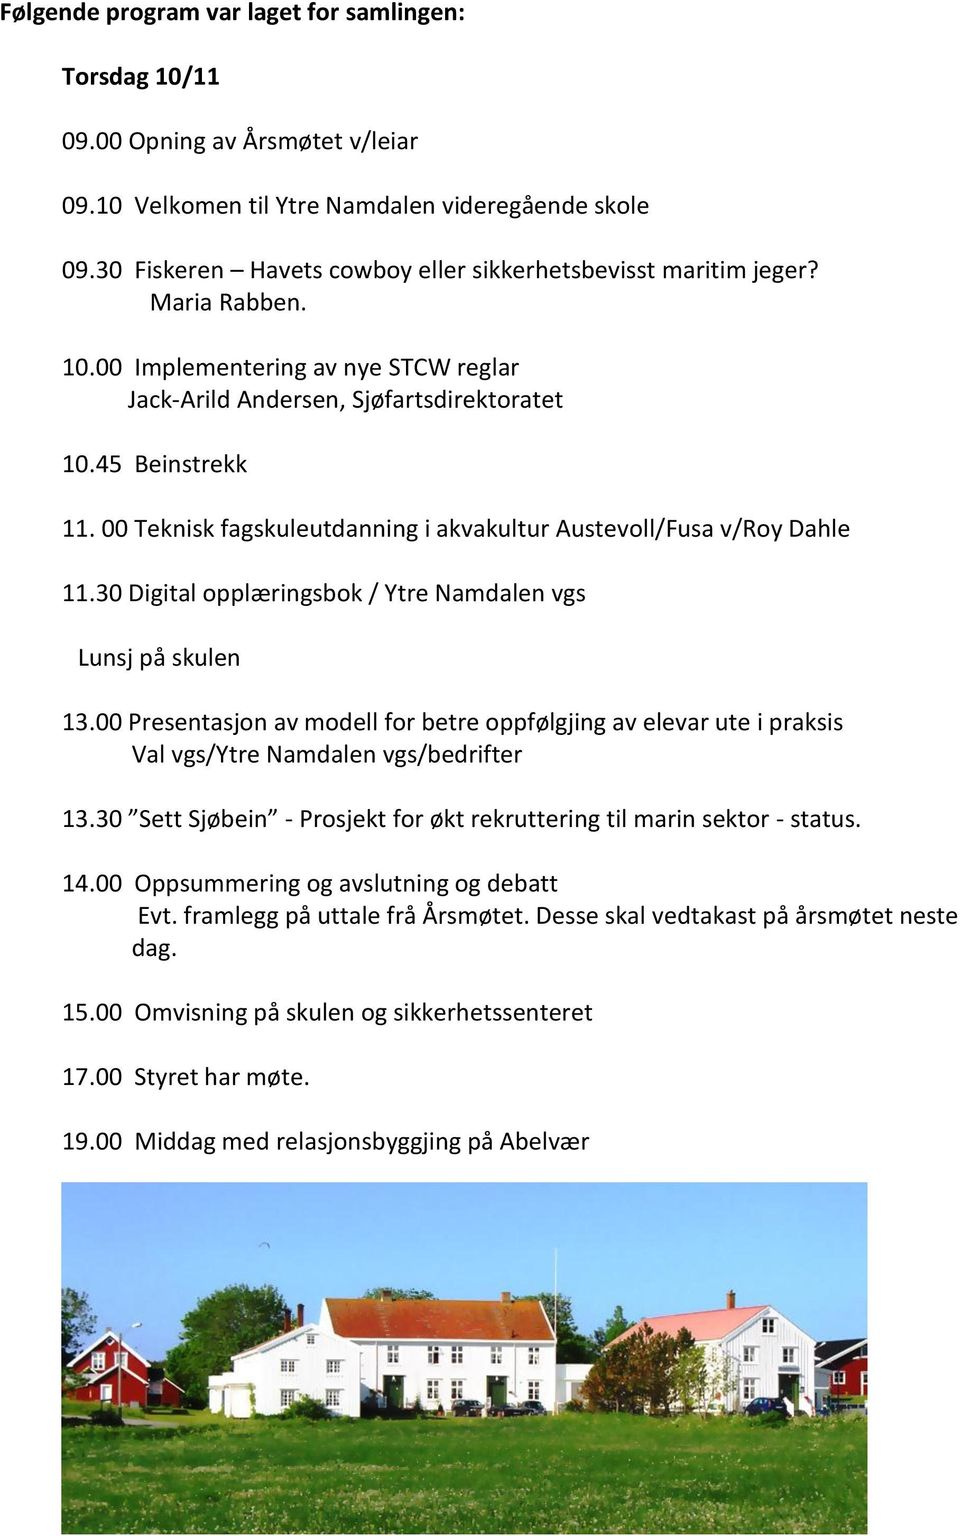 00 Teknisk fagskuleutdanning i akvakultur Austevoll/Fusa v/roy Dahle 11.30 Digital opplæringsbok / Ytre Namdalen vgs Lunsj på skulen 13.